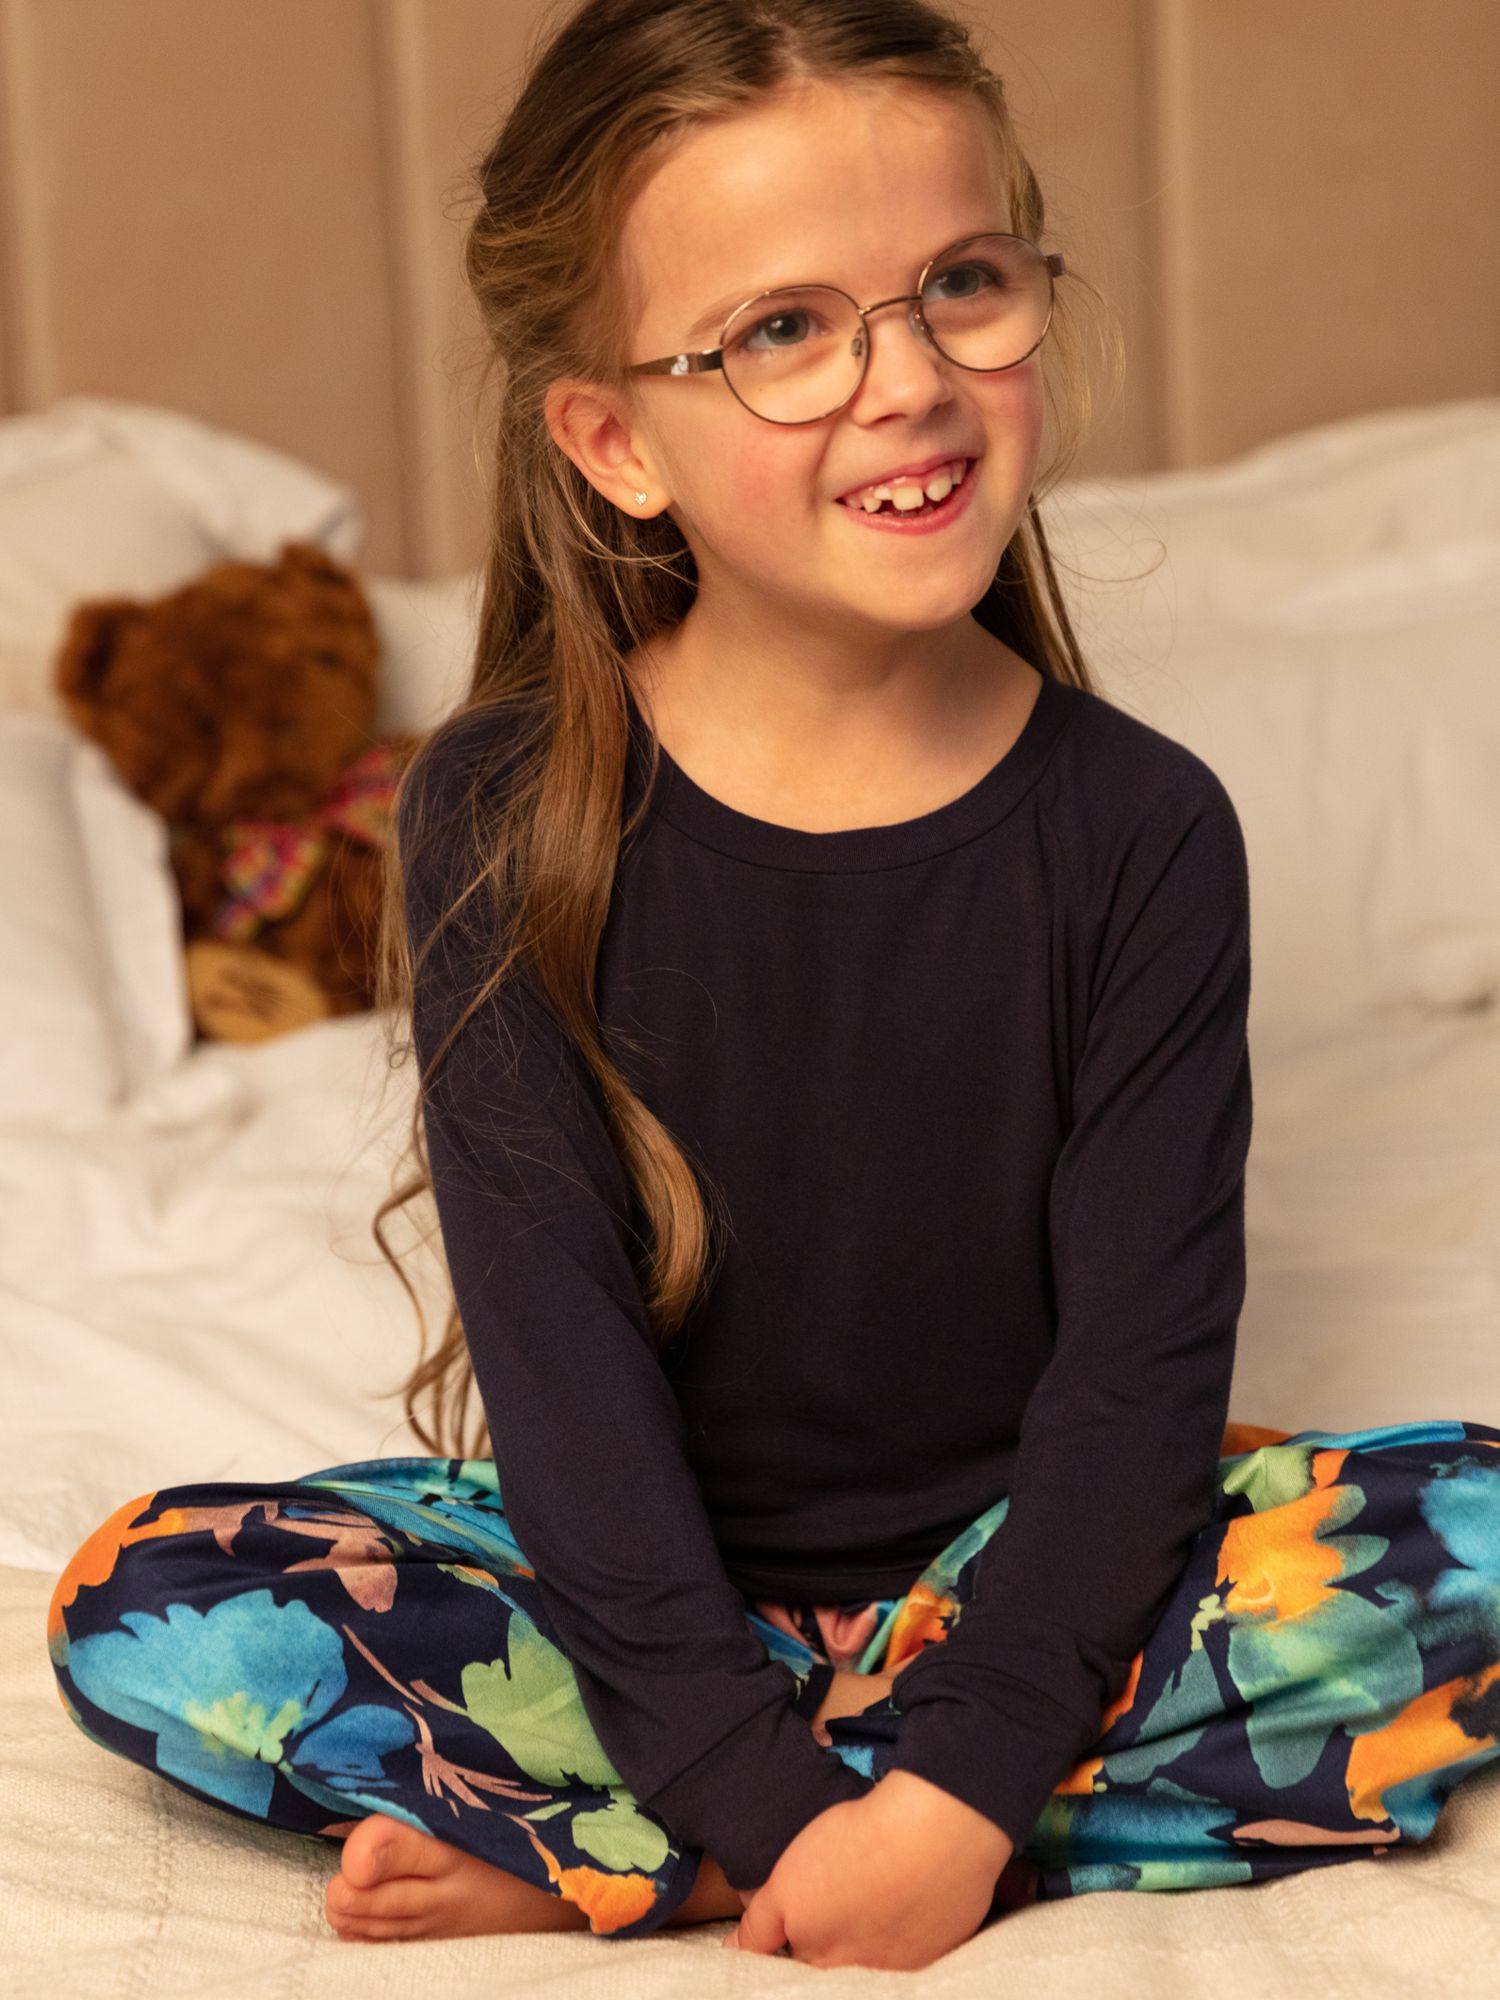 Minijammies Kids' Bea Slouch Top and Floral Print Pyjama Bottoms Set, Dark Blue, 2-3 years